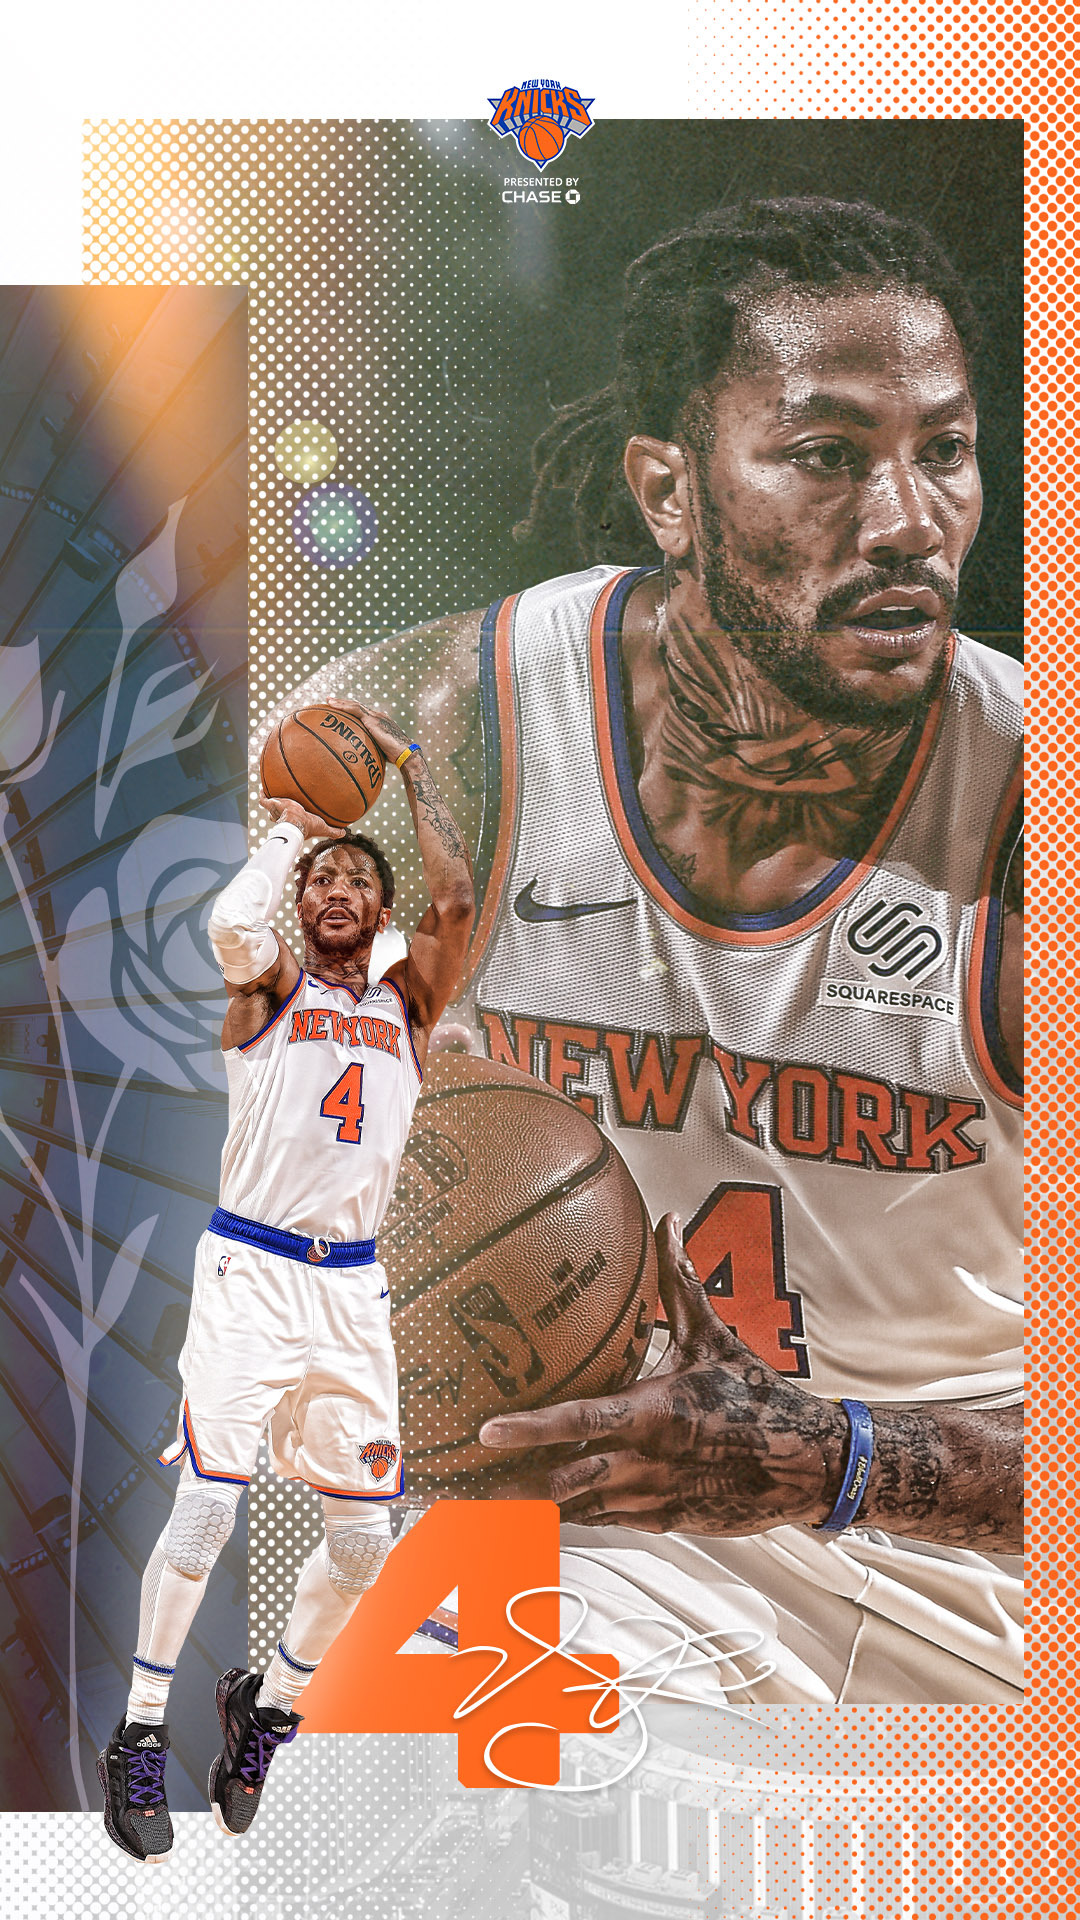 NY Knicks iPhone Wallpaper by TevinFields on DeviantArt